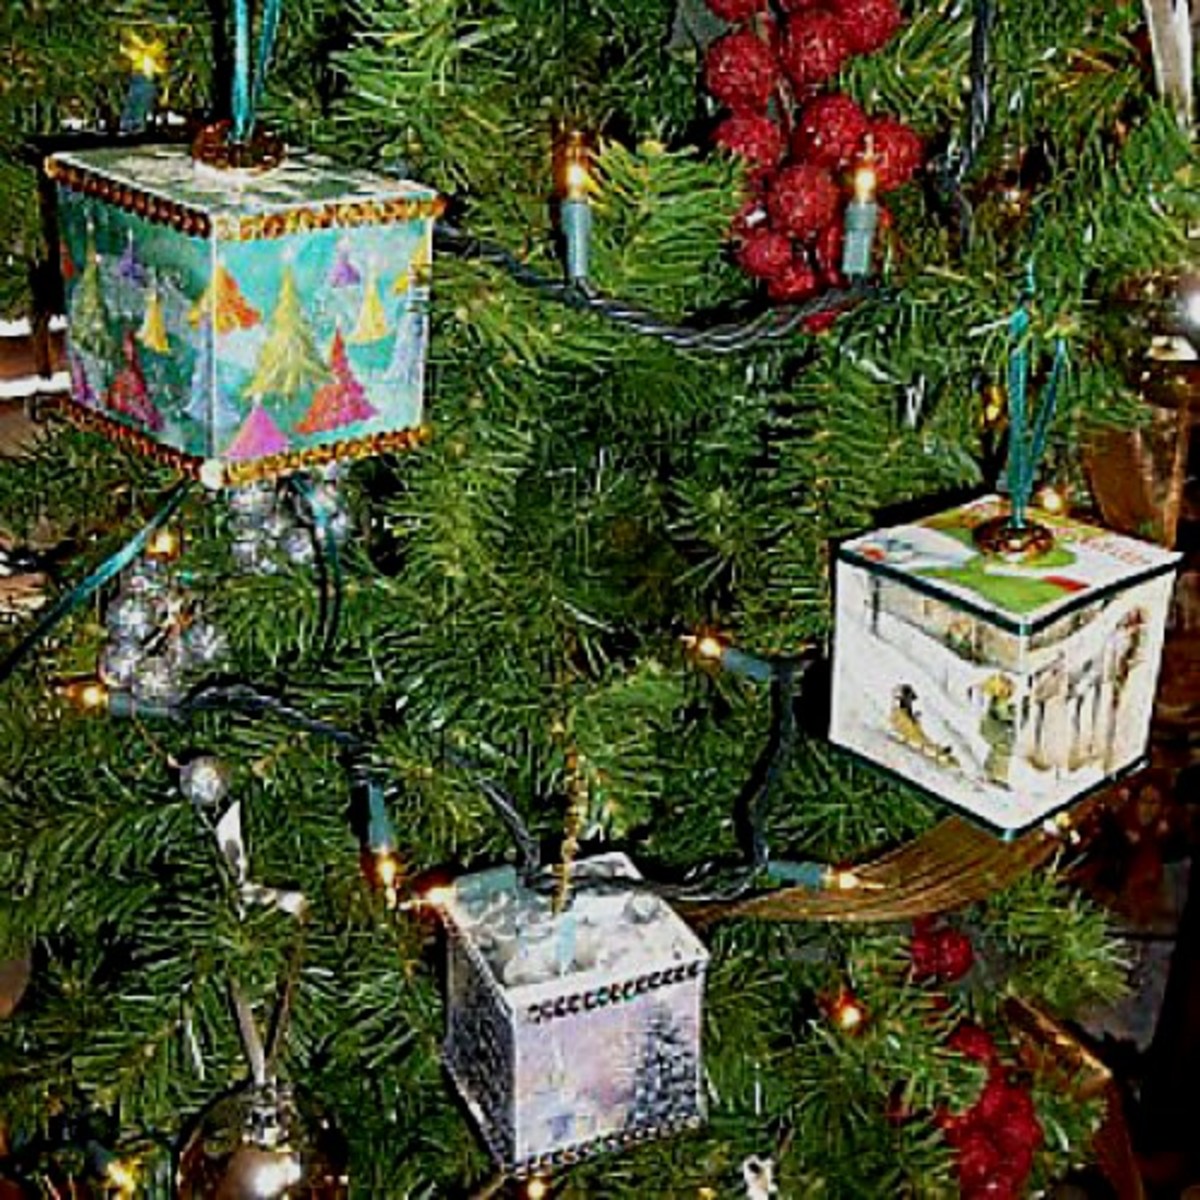 Heirloom Christmas card cube ornaments make beautiful eco-friendly holiday decor.